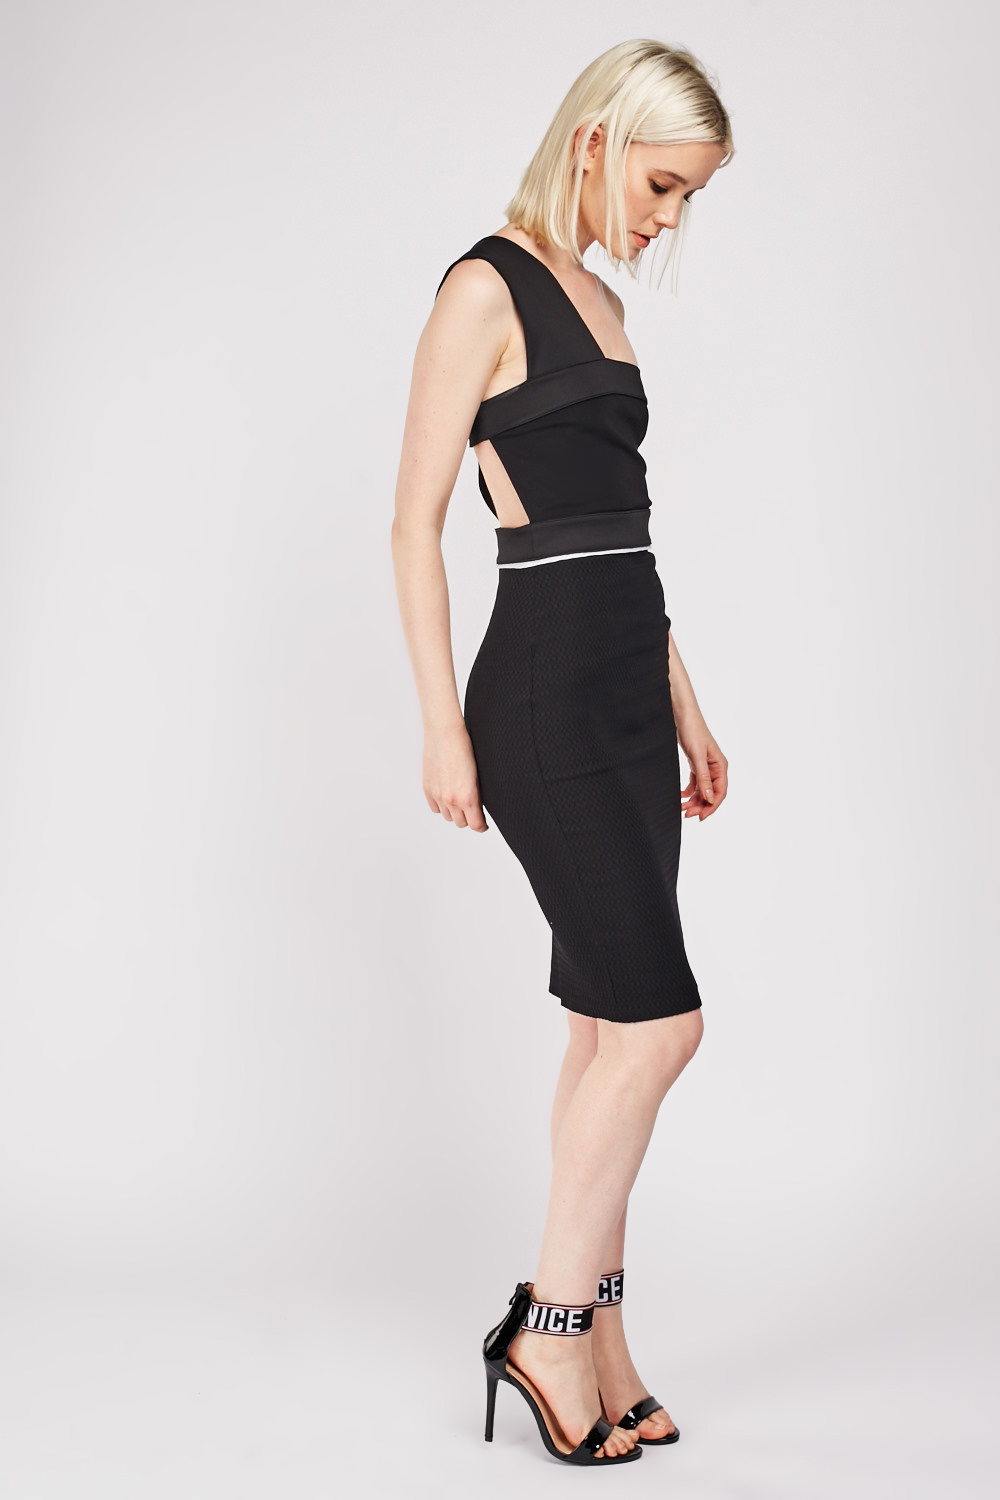 Textured One Shoulder Pencil Dress - Black - Just $6